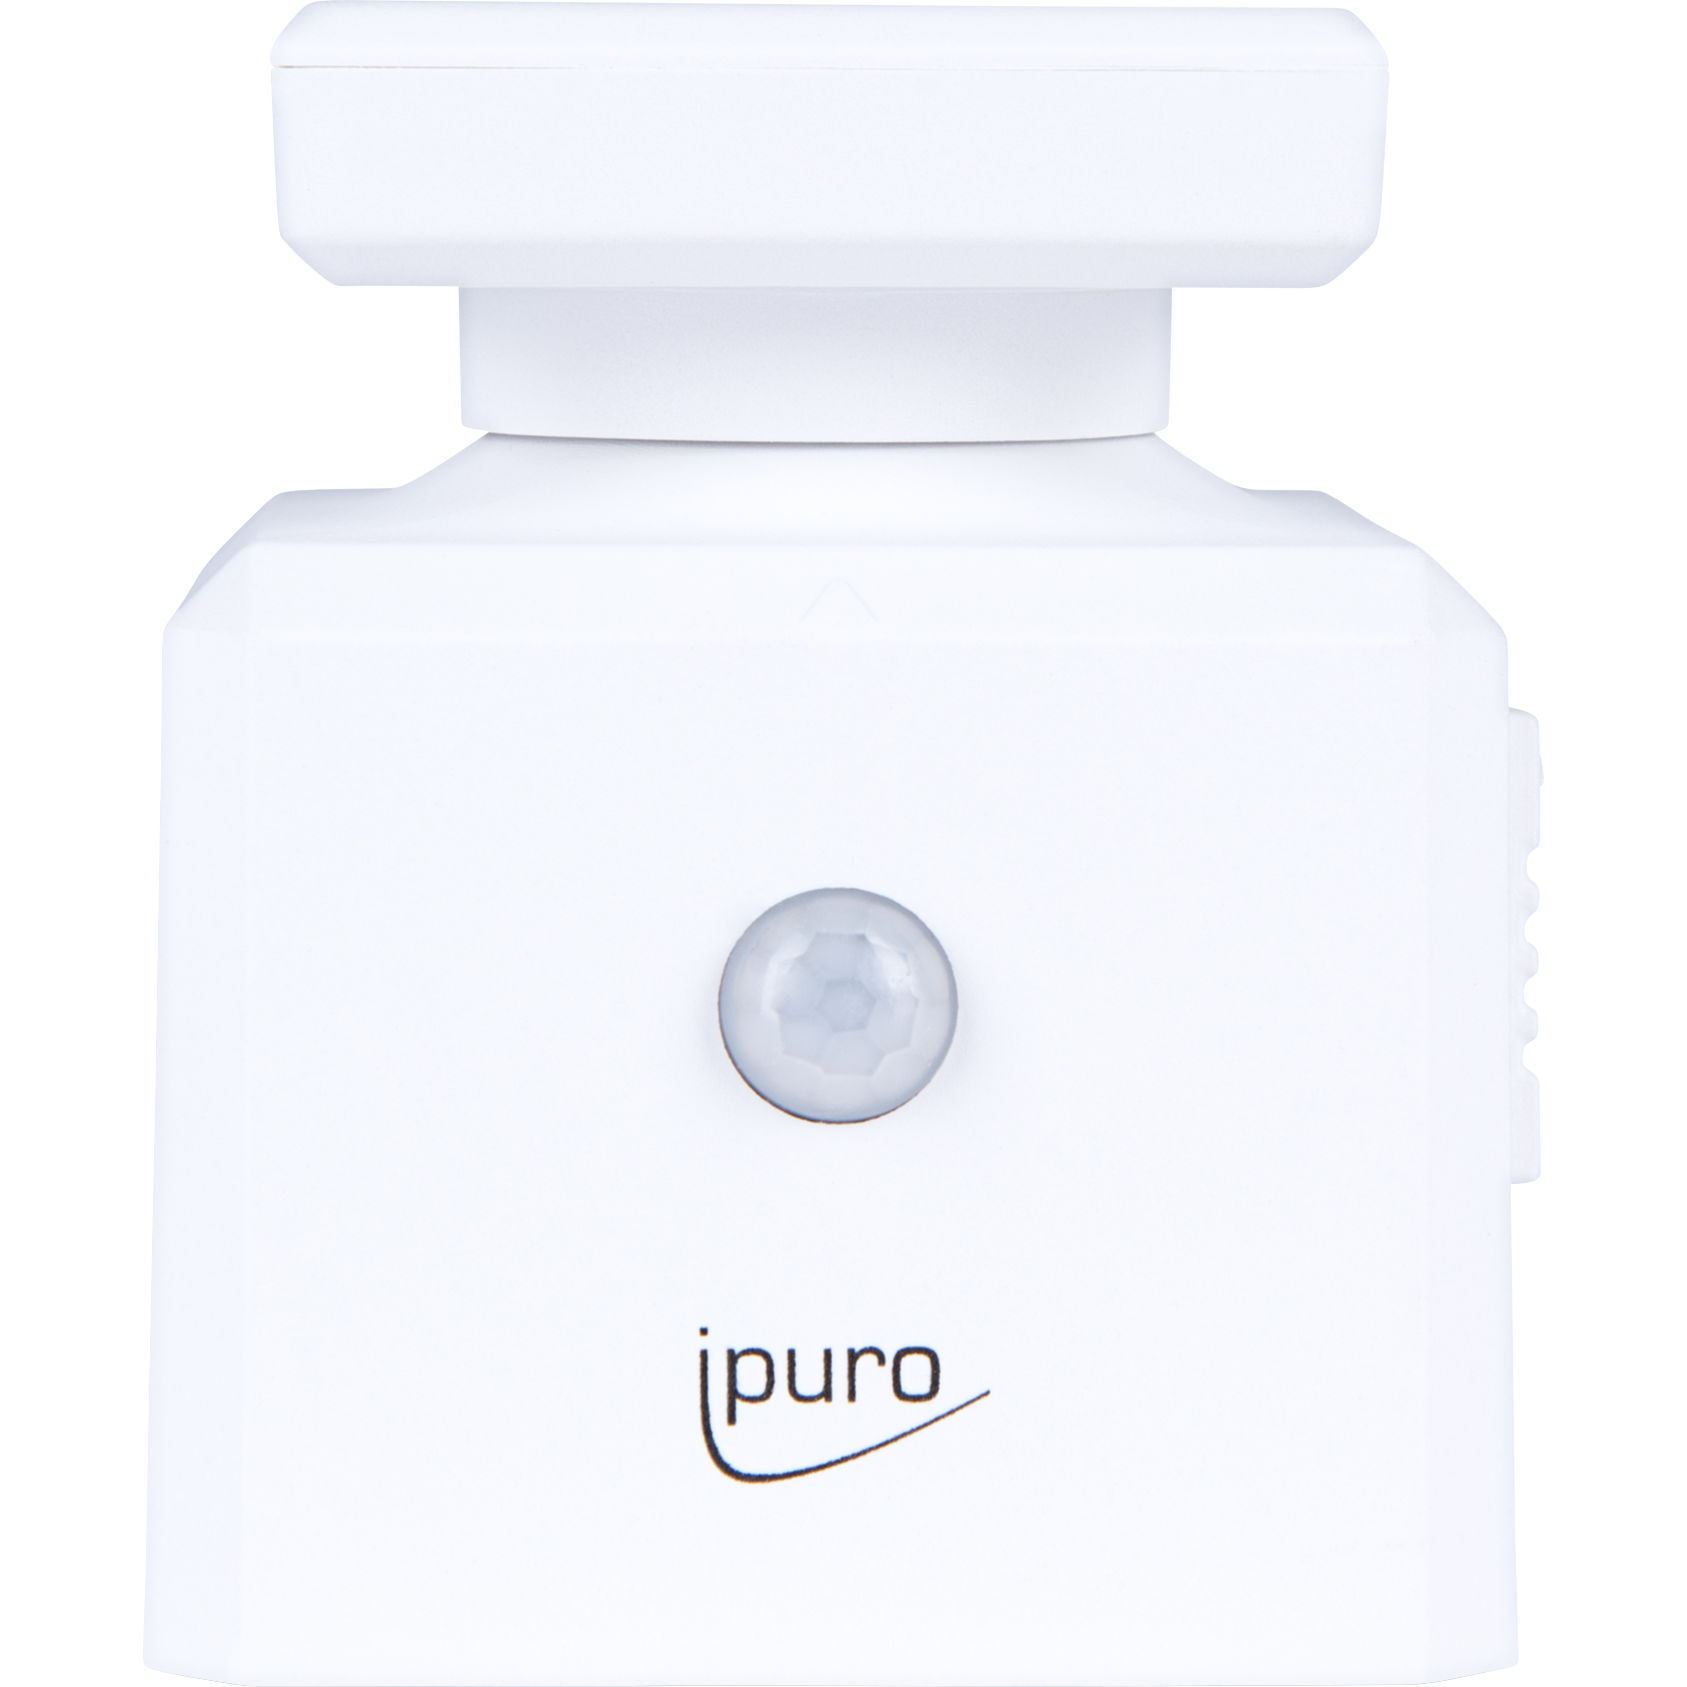 ipuro Plug-in Essentials - Buy online now